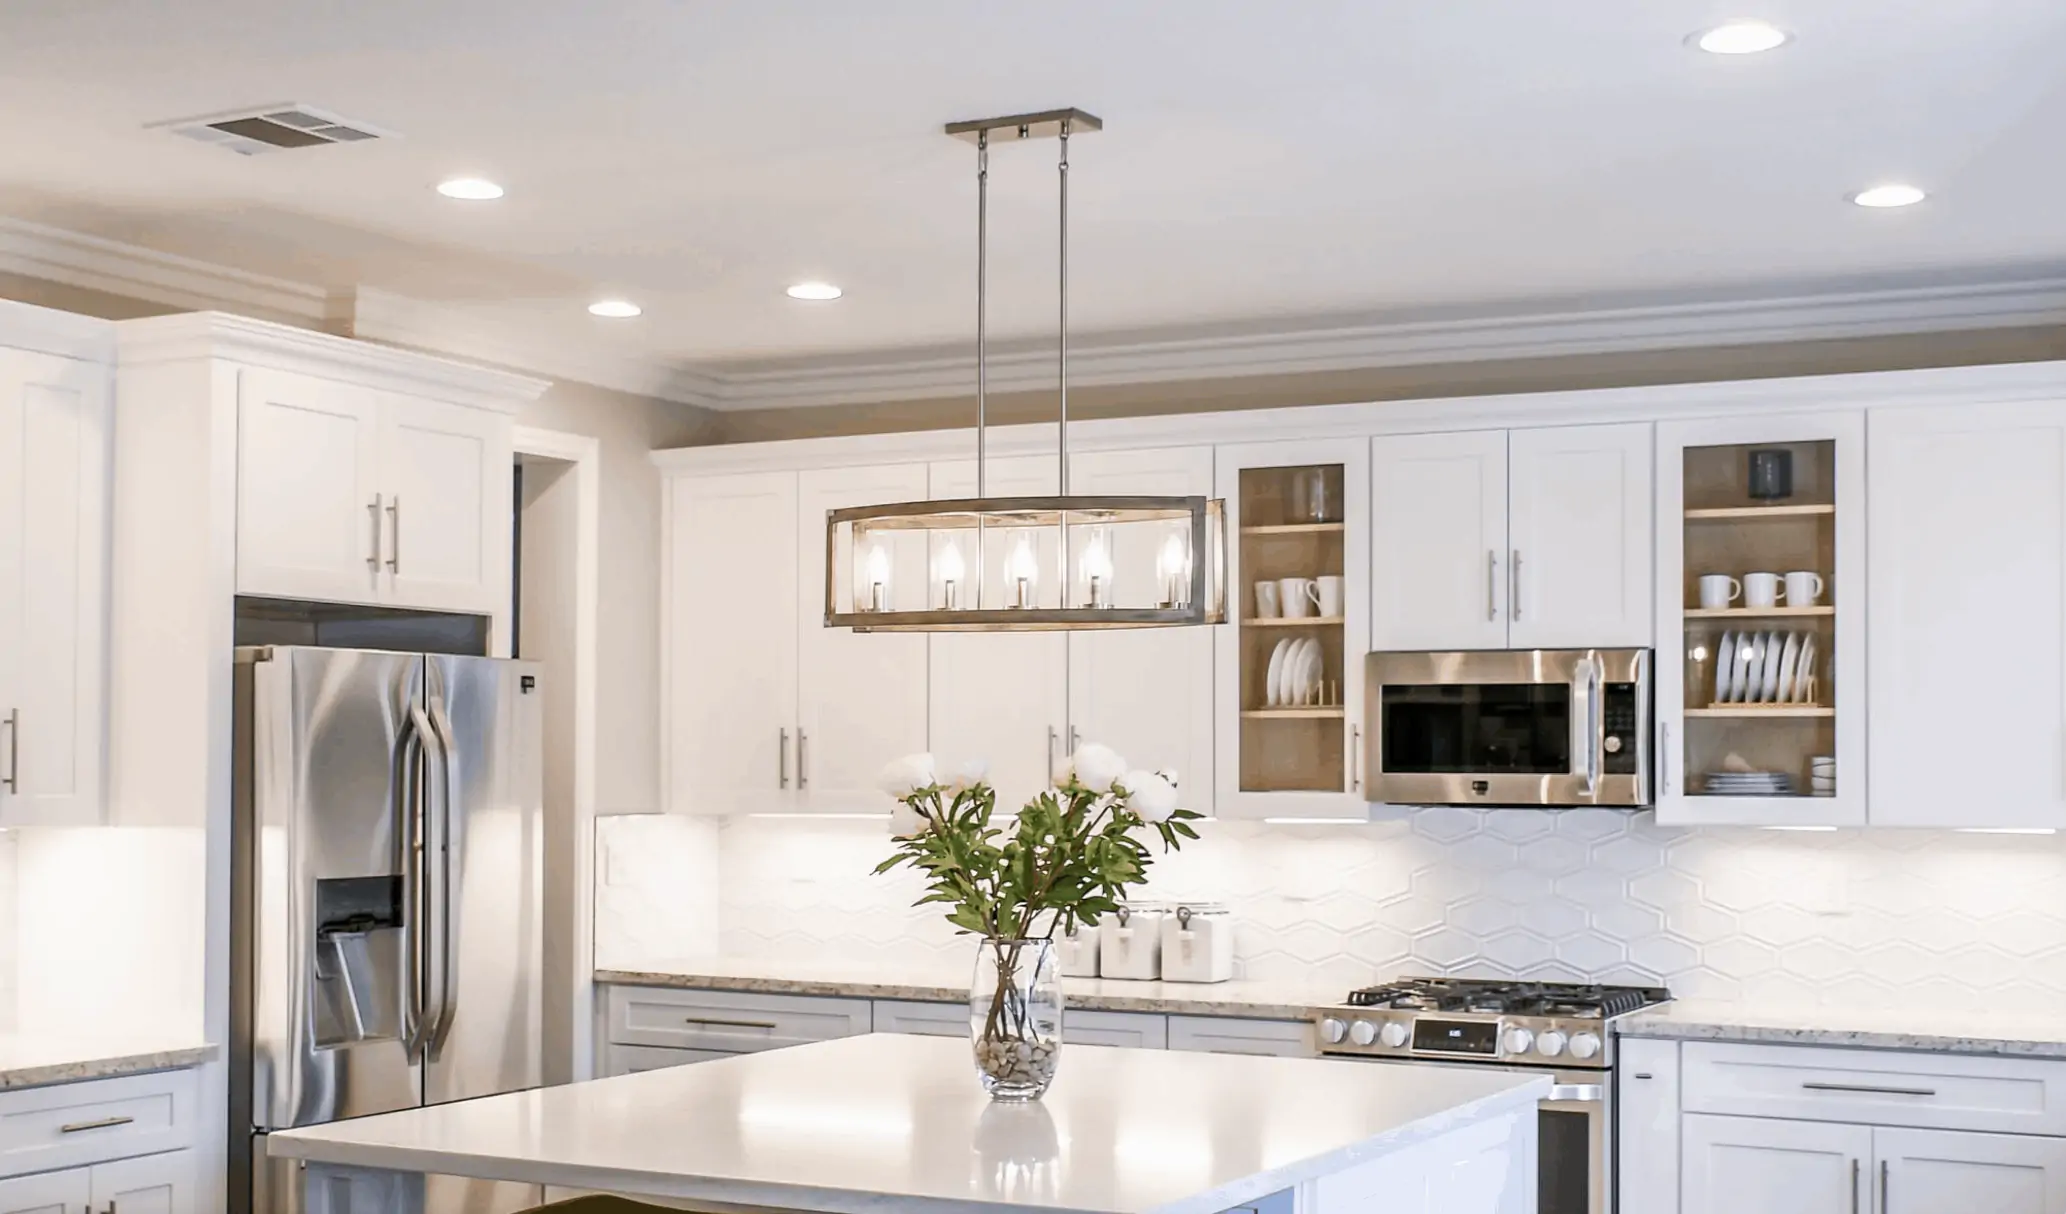 A sleek kitchen with multiple overhead light fixtures